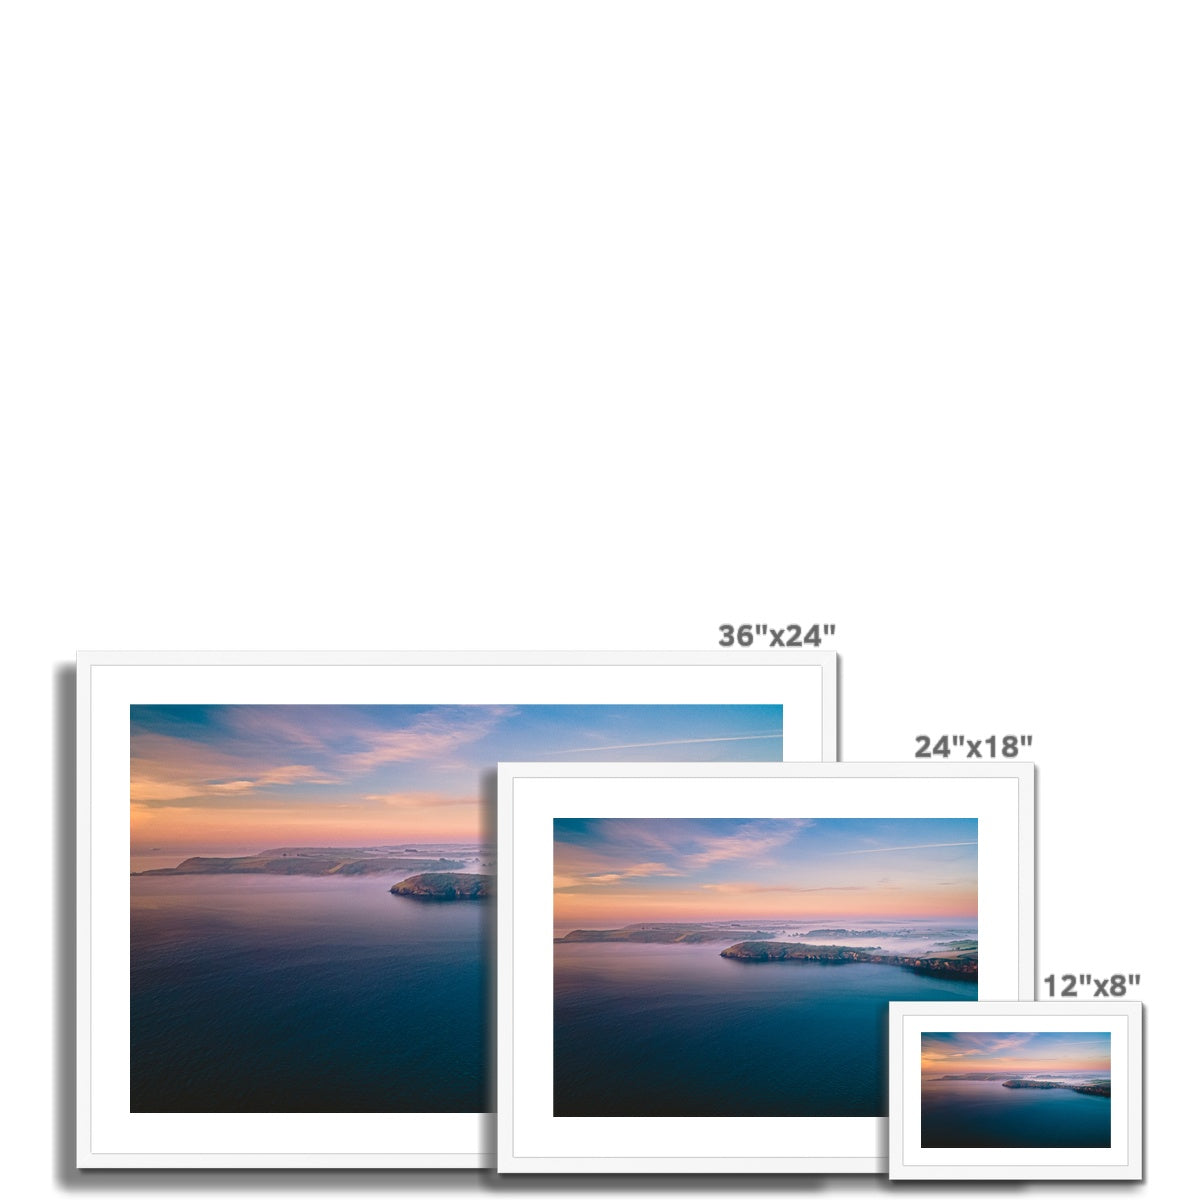 helford passage dawn frame sizes